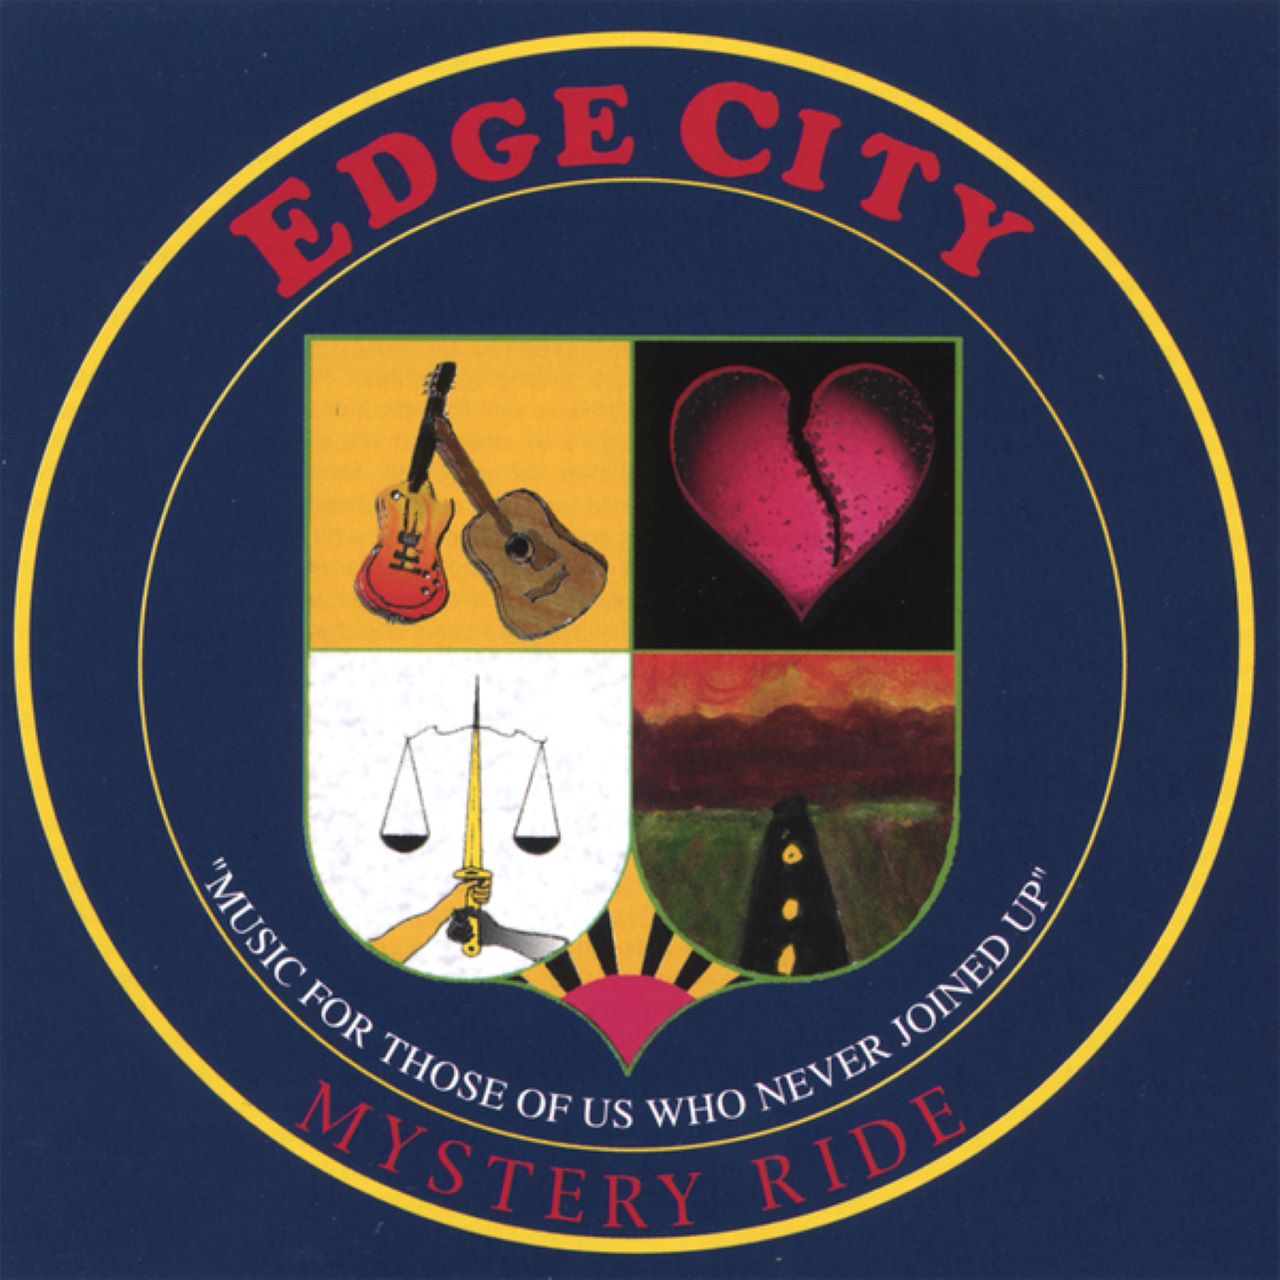 Edge City - Mystery Ride cover album